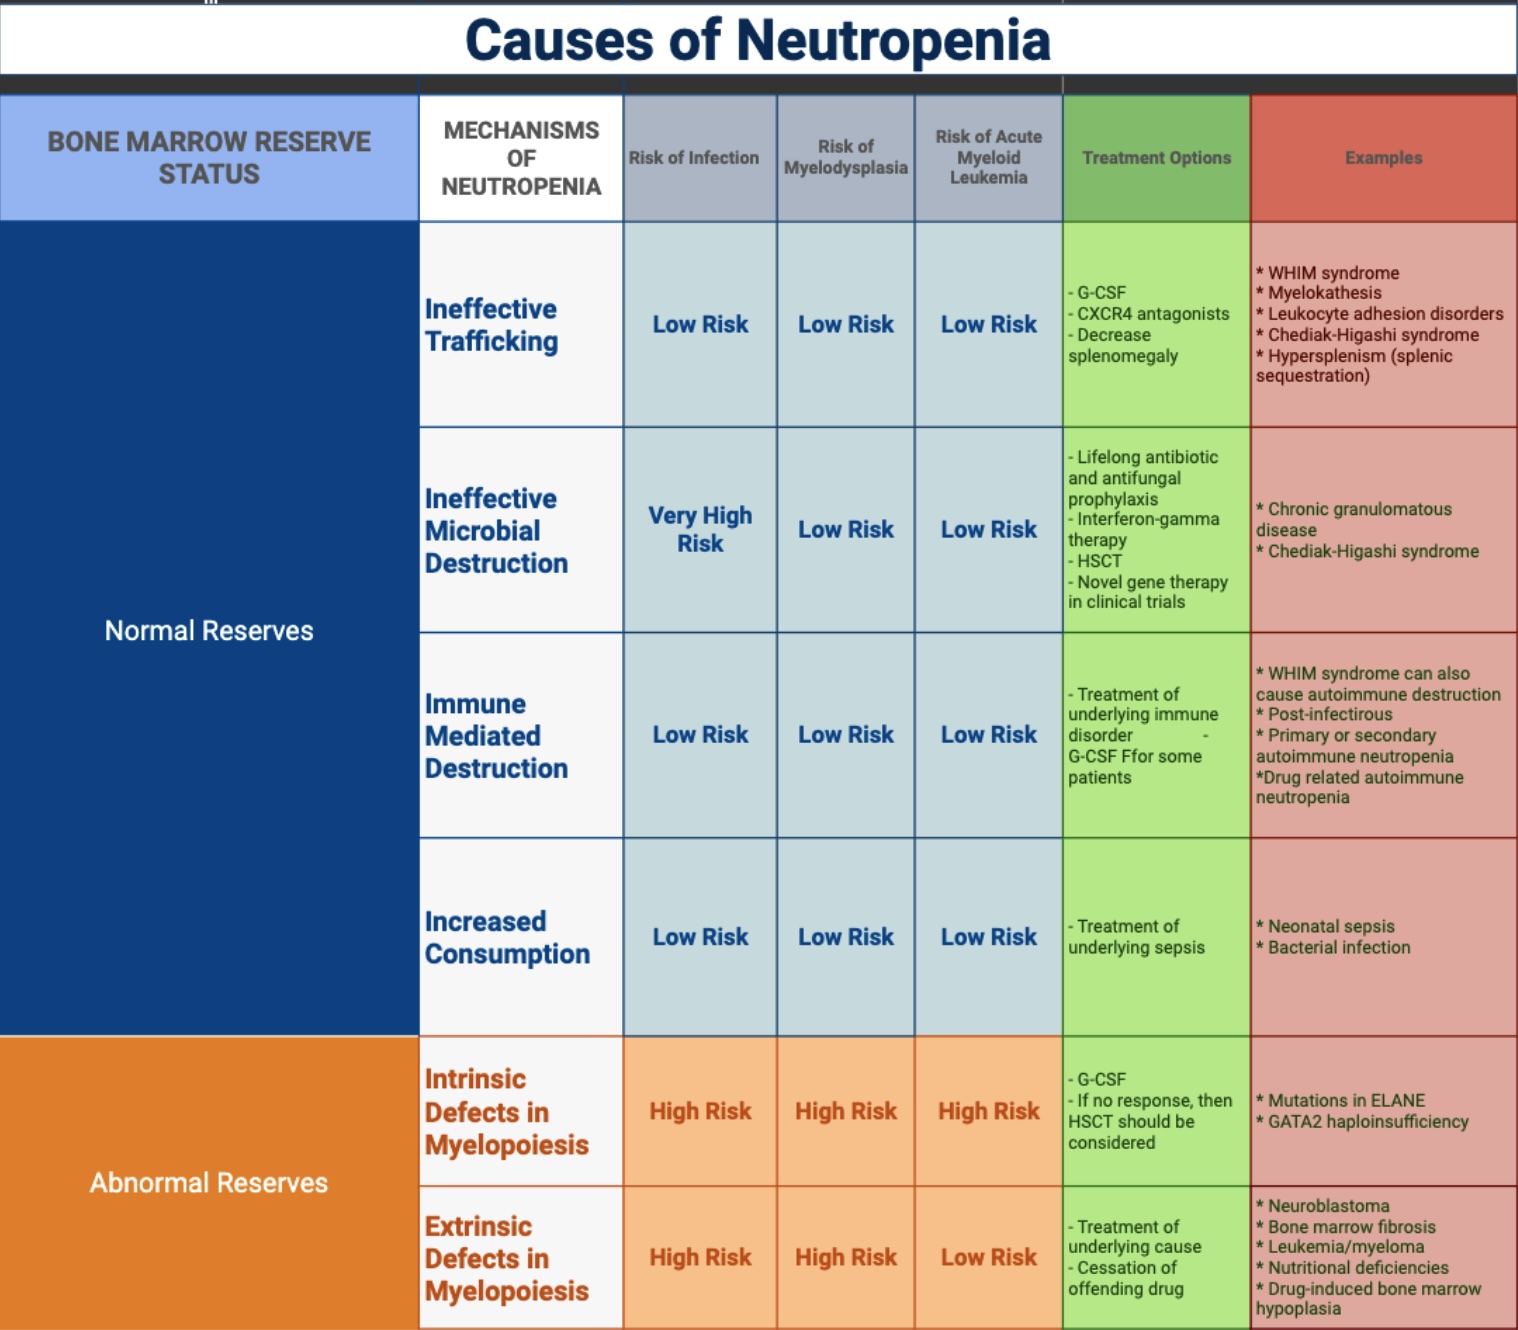 <p>Causes of Neutropenia